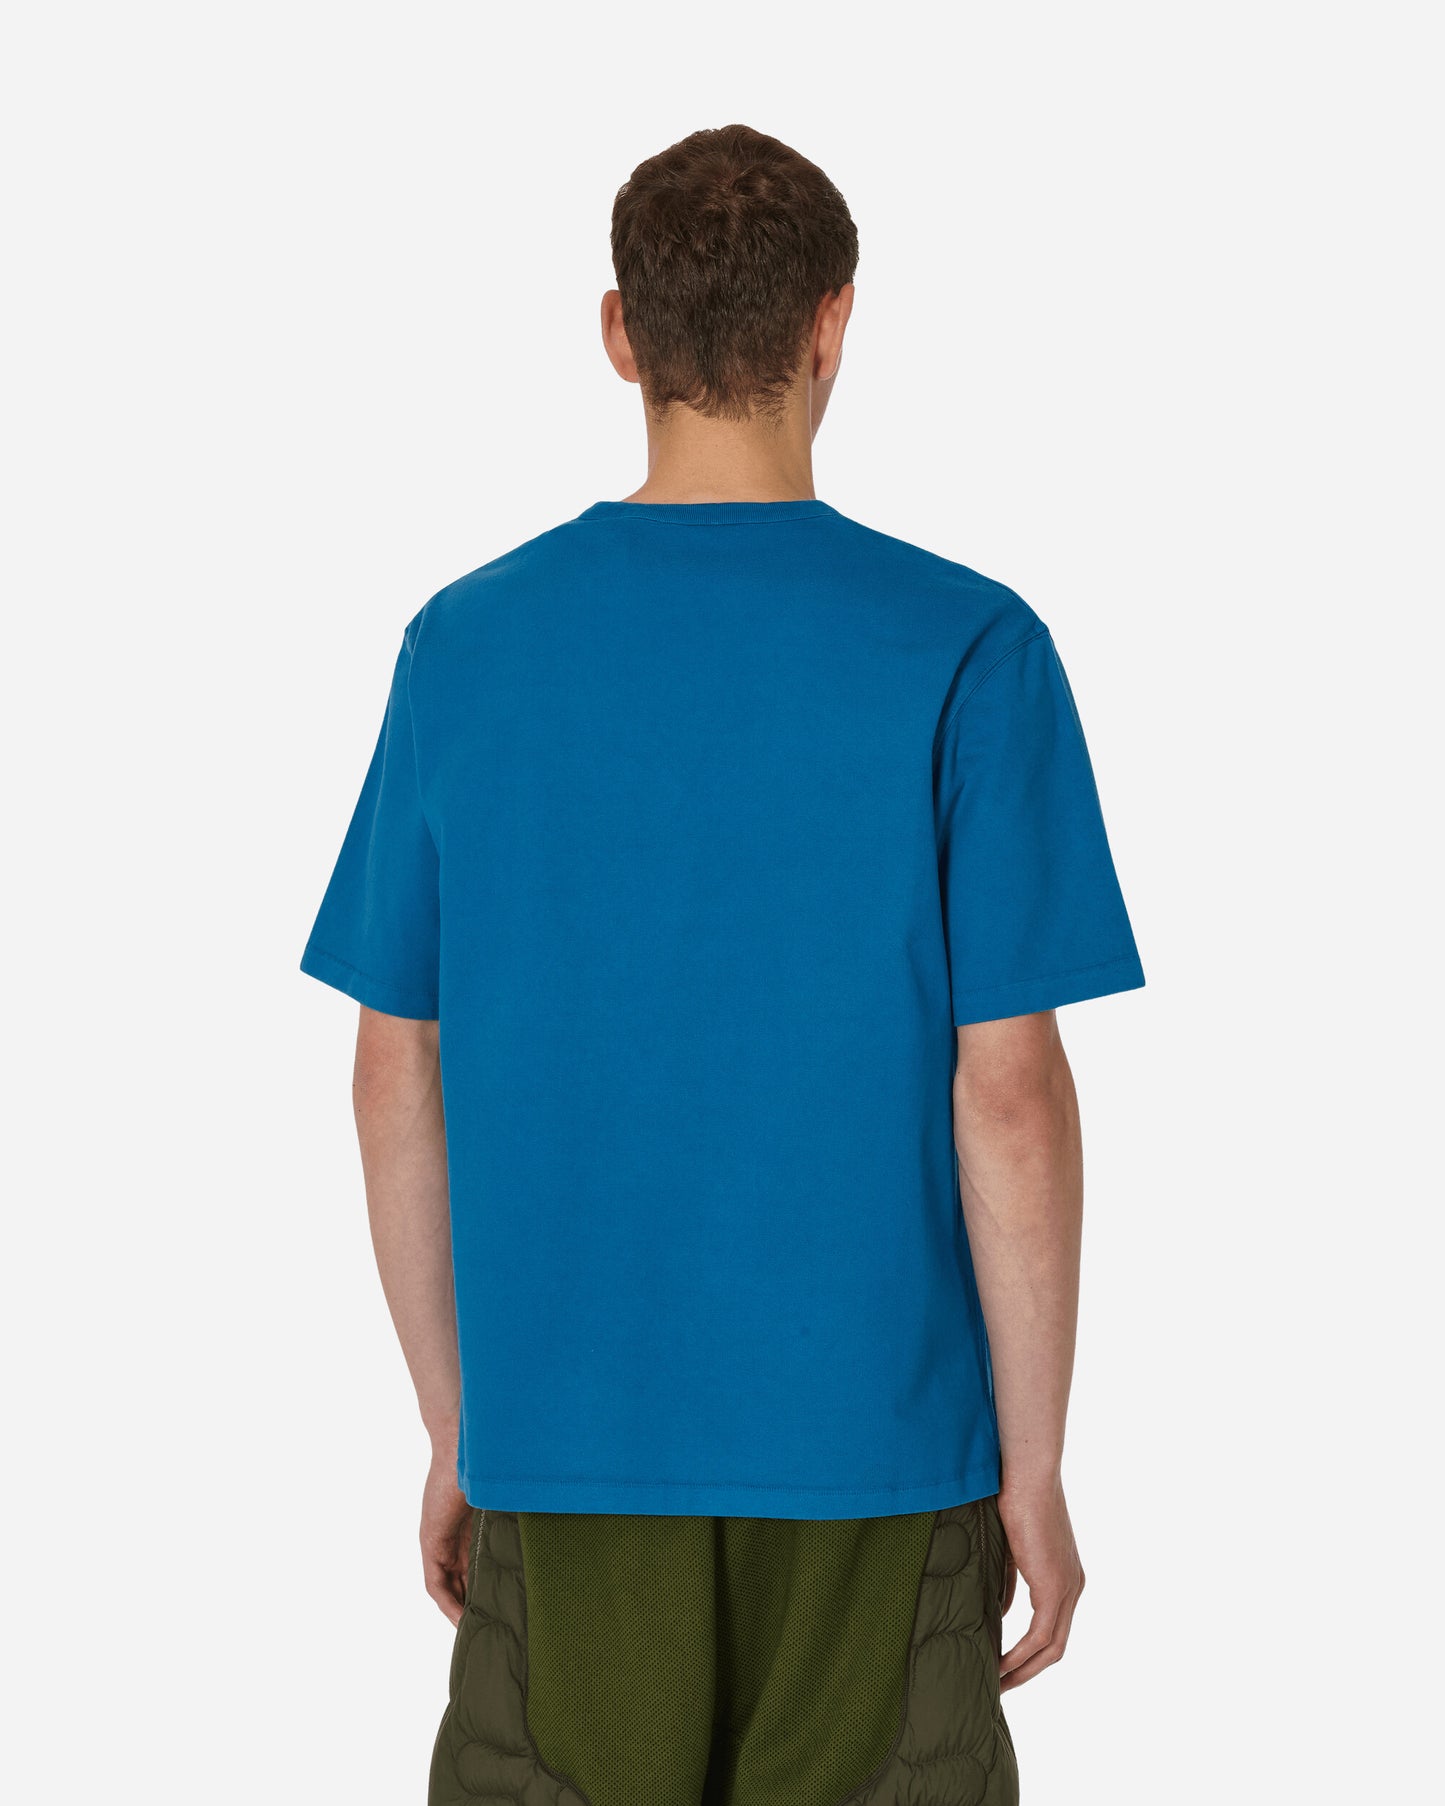 Moncler Genius T-Shirt X Salehe Bembury Blue T-Shirts Shortsleeve 8C00001M3236 778